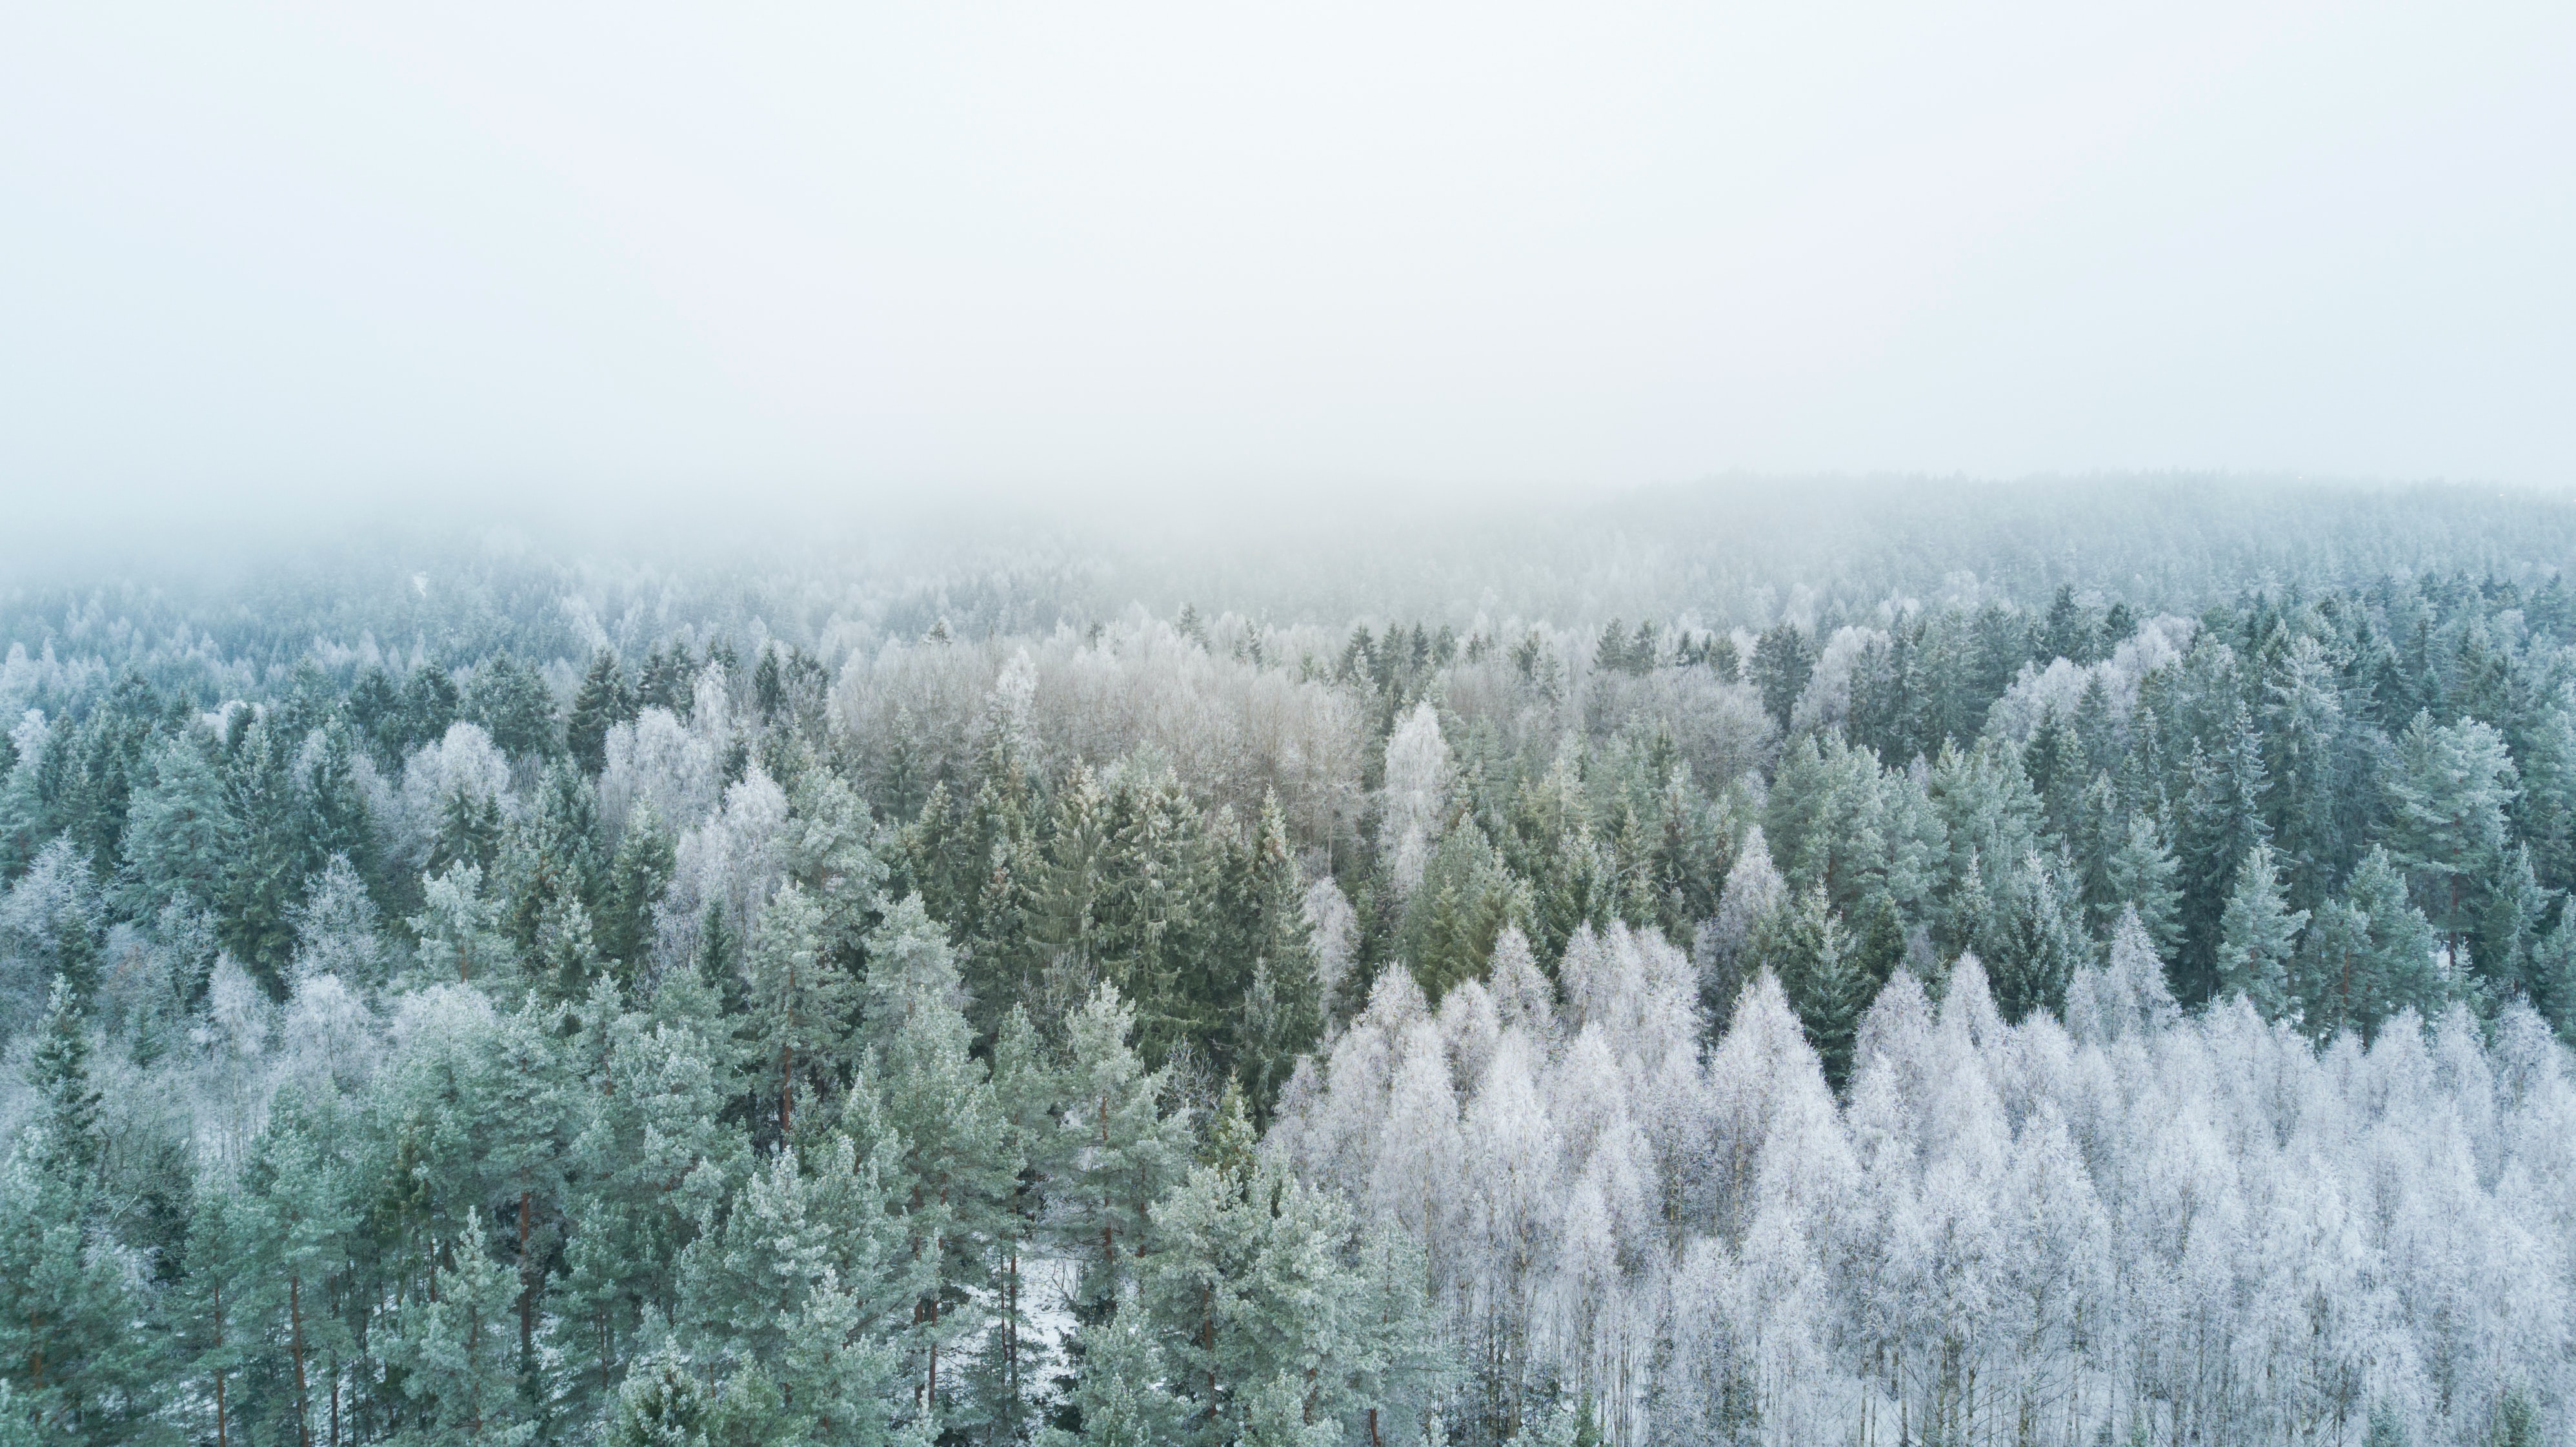 Spruce trees growing in Norway